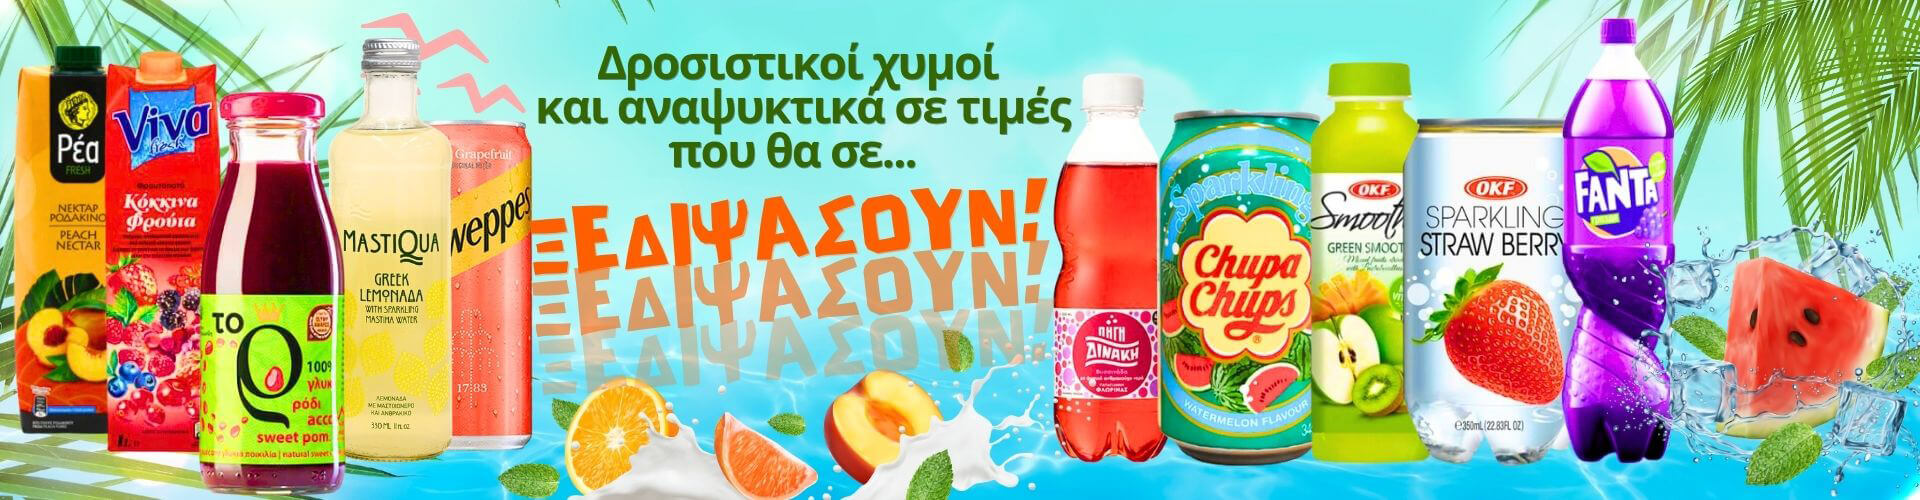 juices & soft drinks banner